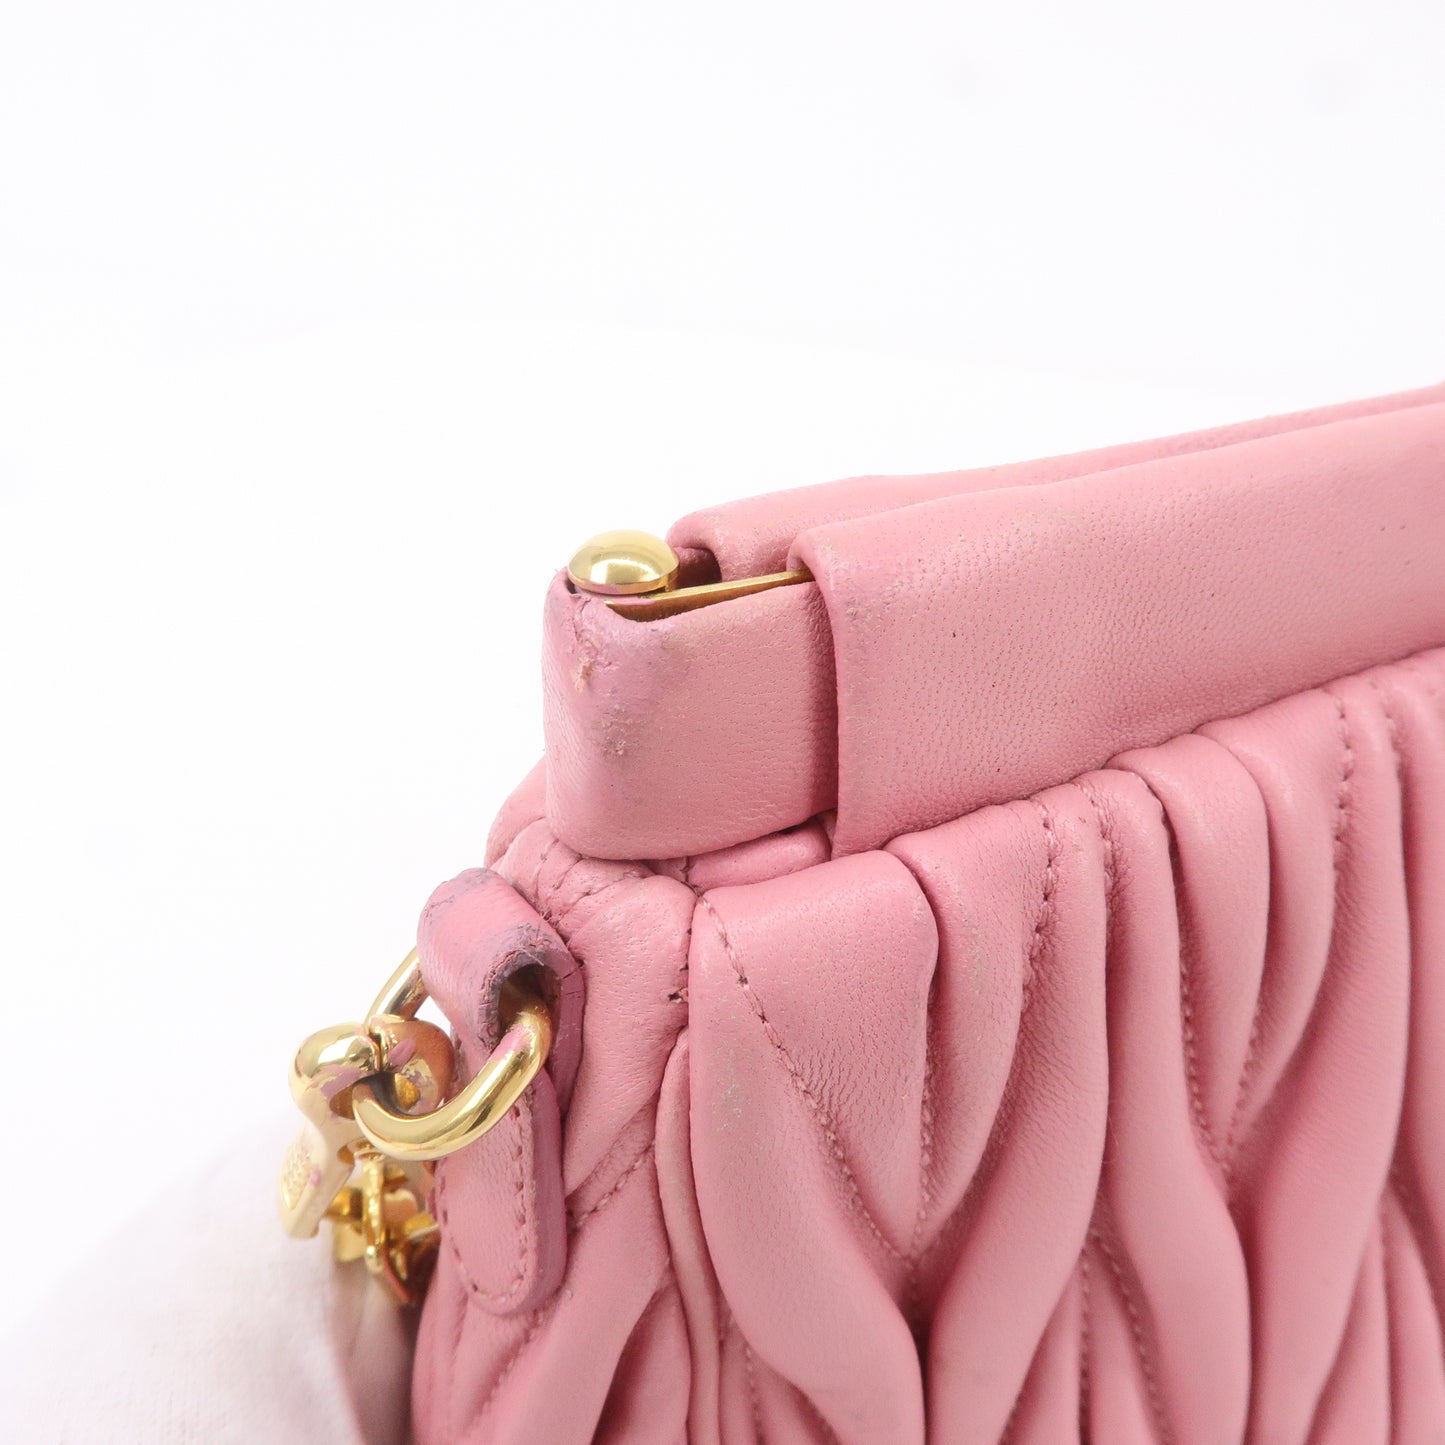 MIU MIU Logo Leather Shoulder Bag Hand Bag Pink Gold